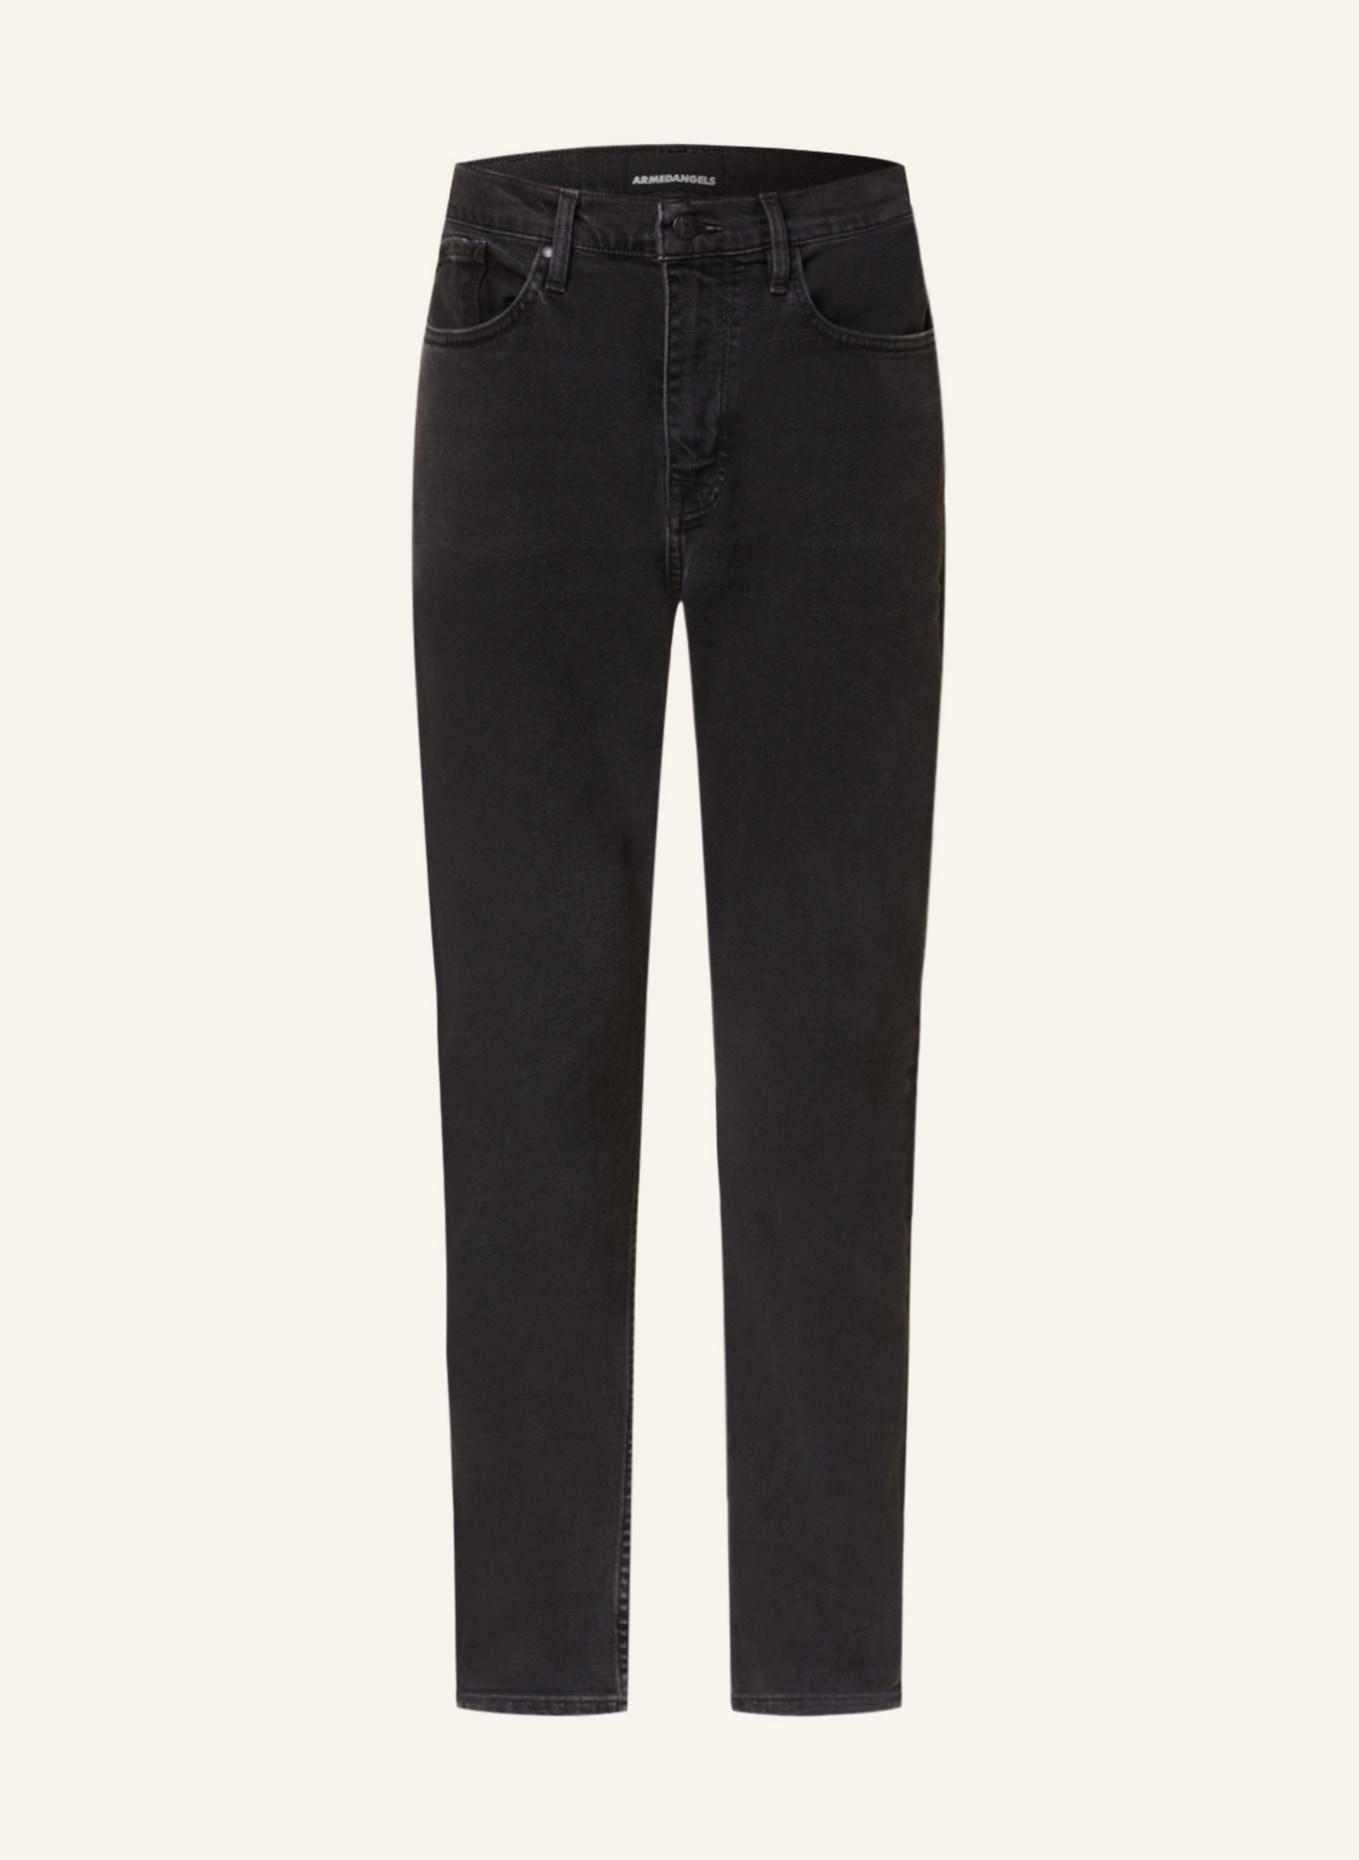 ARMEDANGELS Jeans AARJO TARPA Tapered Fit, Farbe: 2438 black washed authentic (Bild 1)